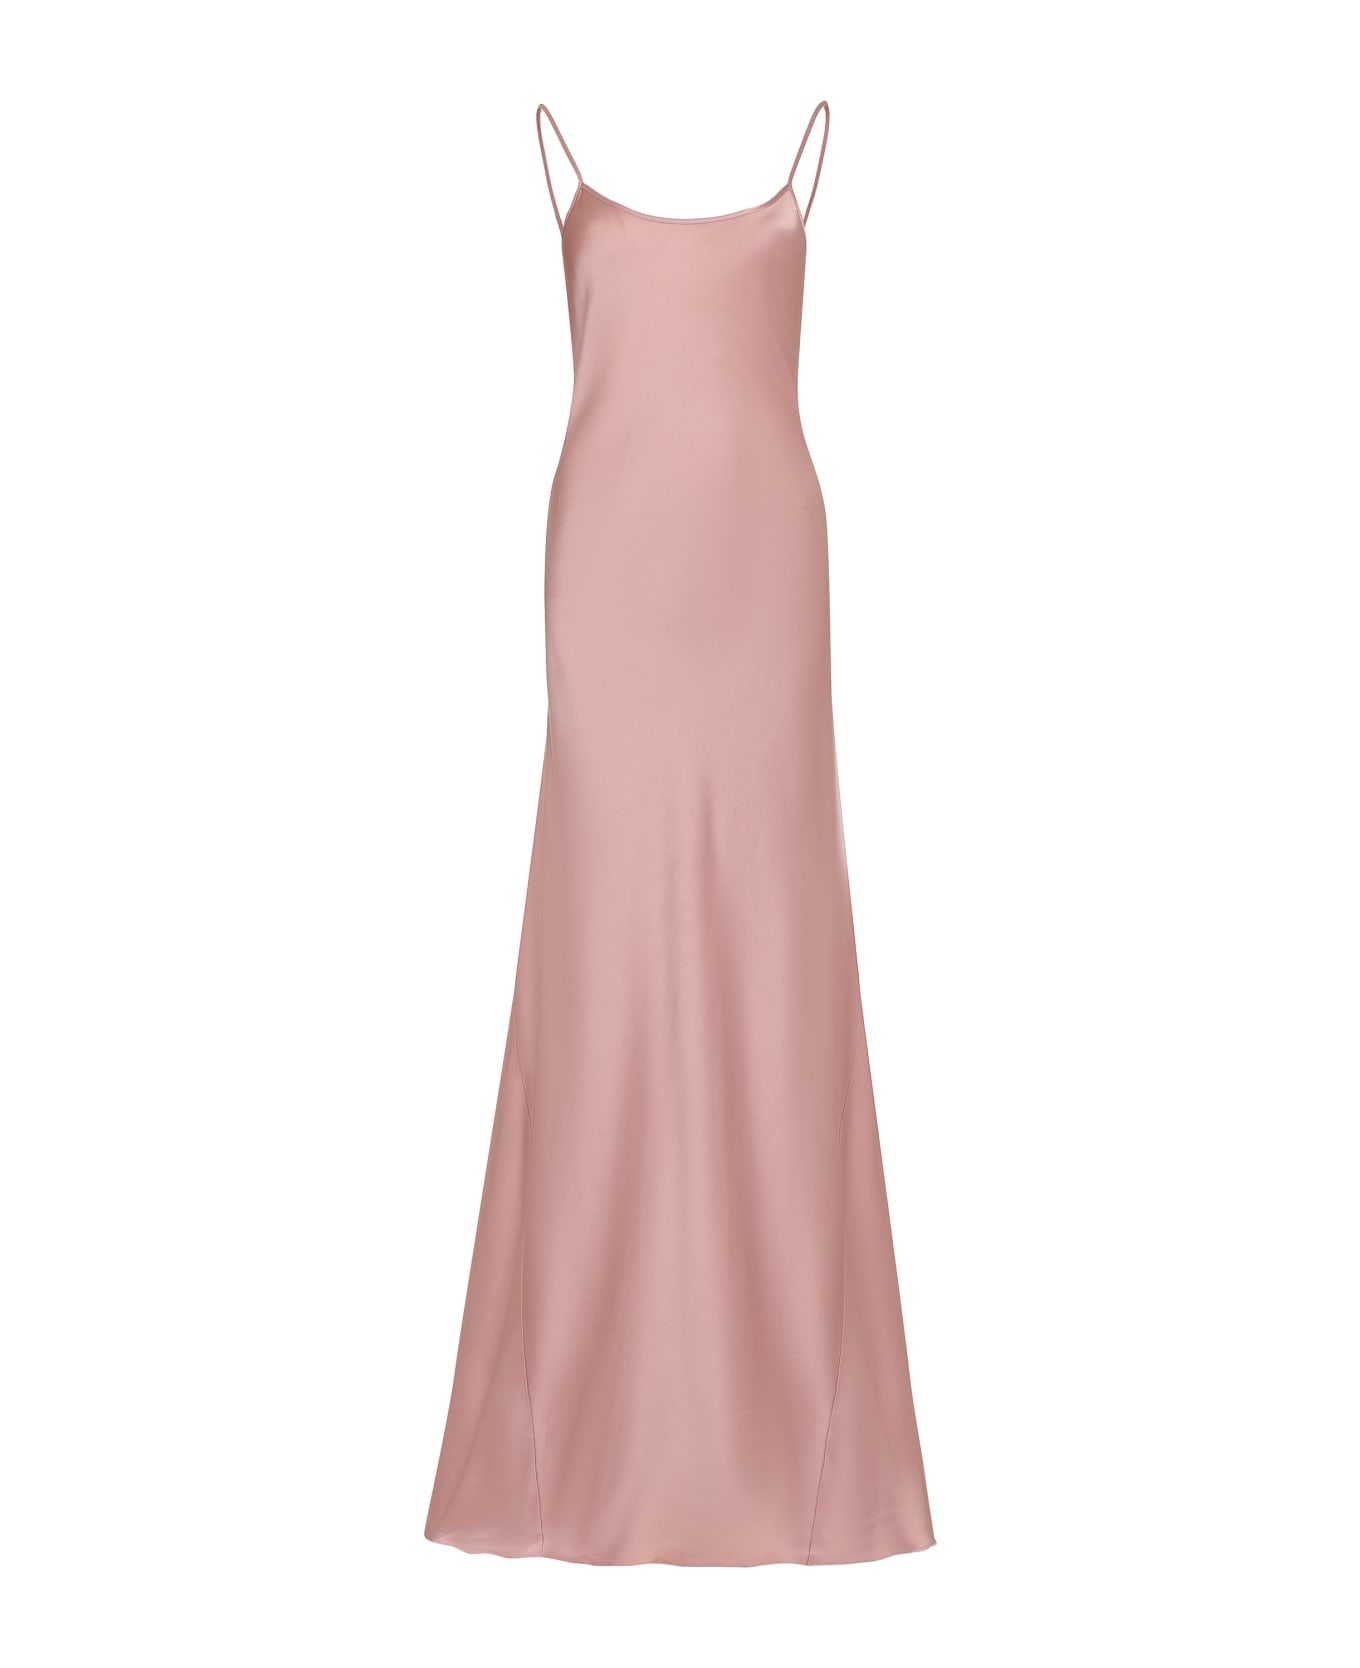 Victoria Beckham Crepe Dress - Pink